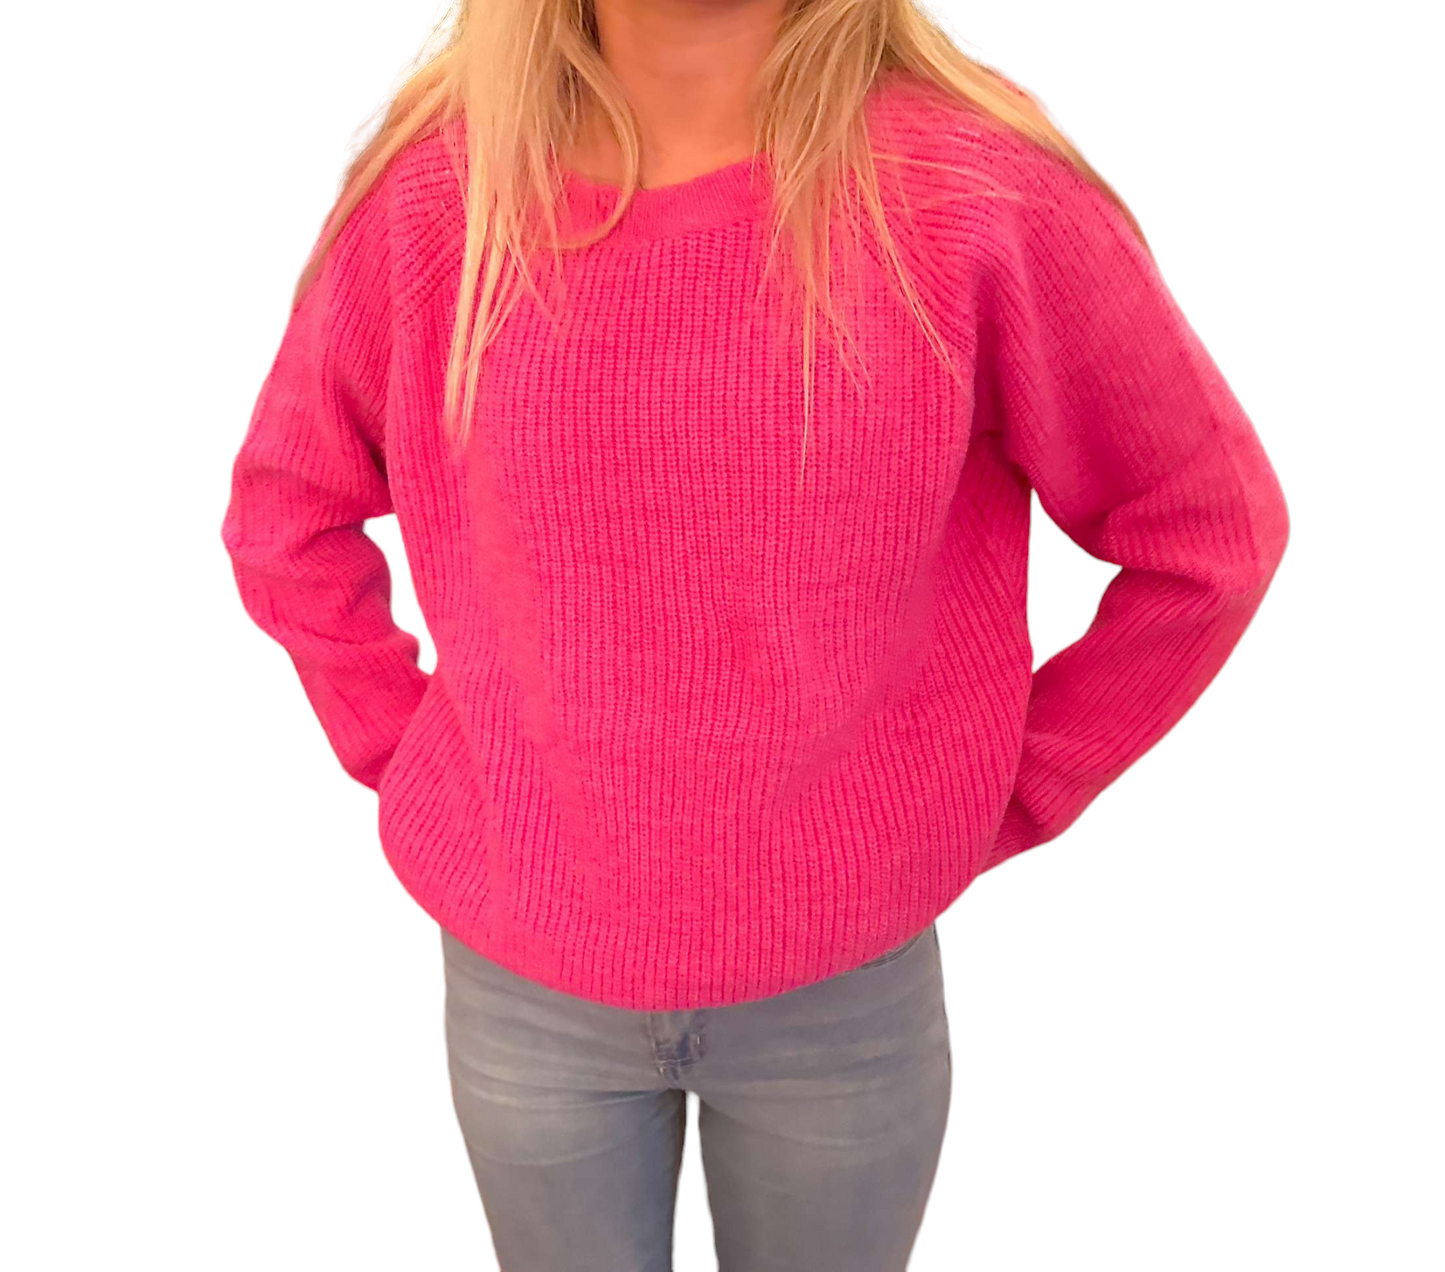 Olivia sweater